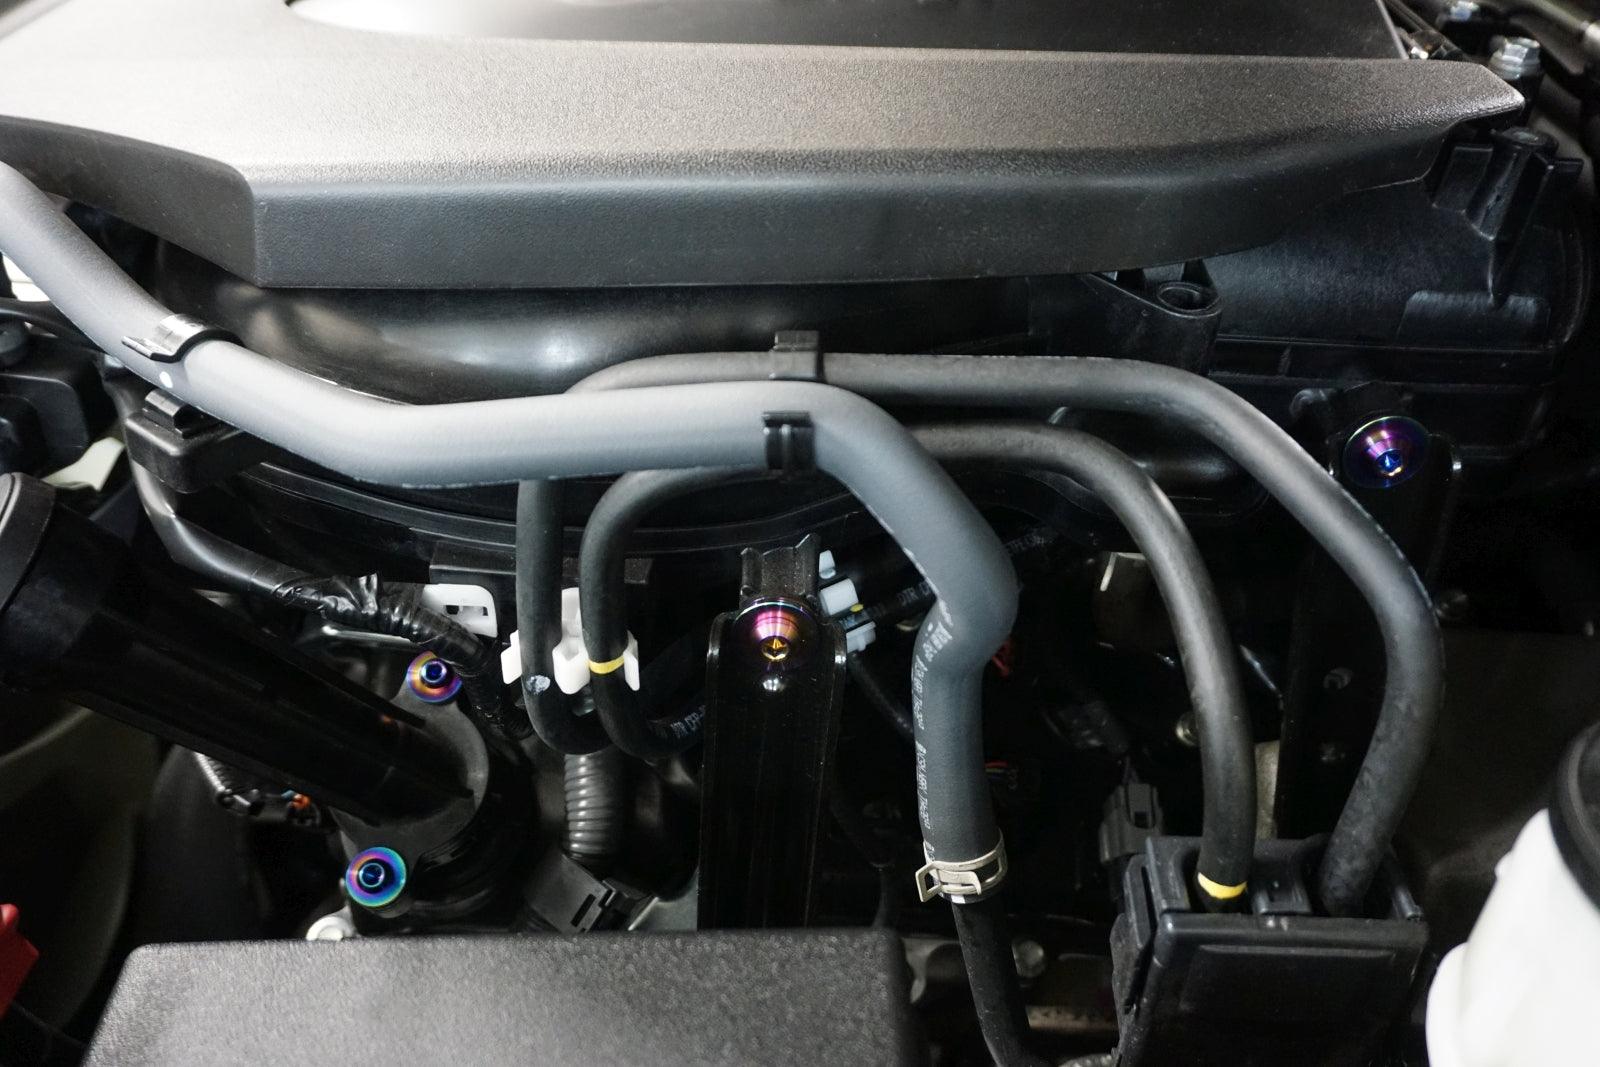 ZSPEC "Stage 3" Dress Up Bolts® Fastener Kit for '16-23 Toyota Tacoma N300, Titanium  Grade-5 GR5 Hardware Engine Bay Performance Upgrade Modification Car Auto Vehicle Drift rwd usdm